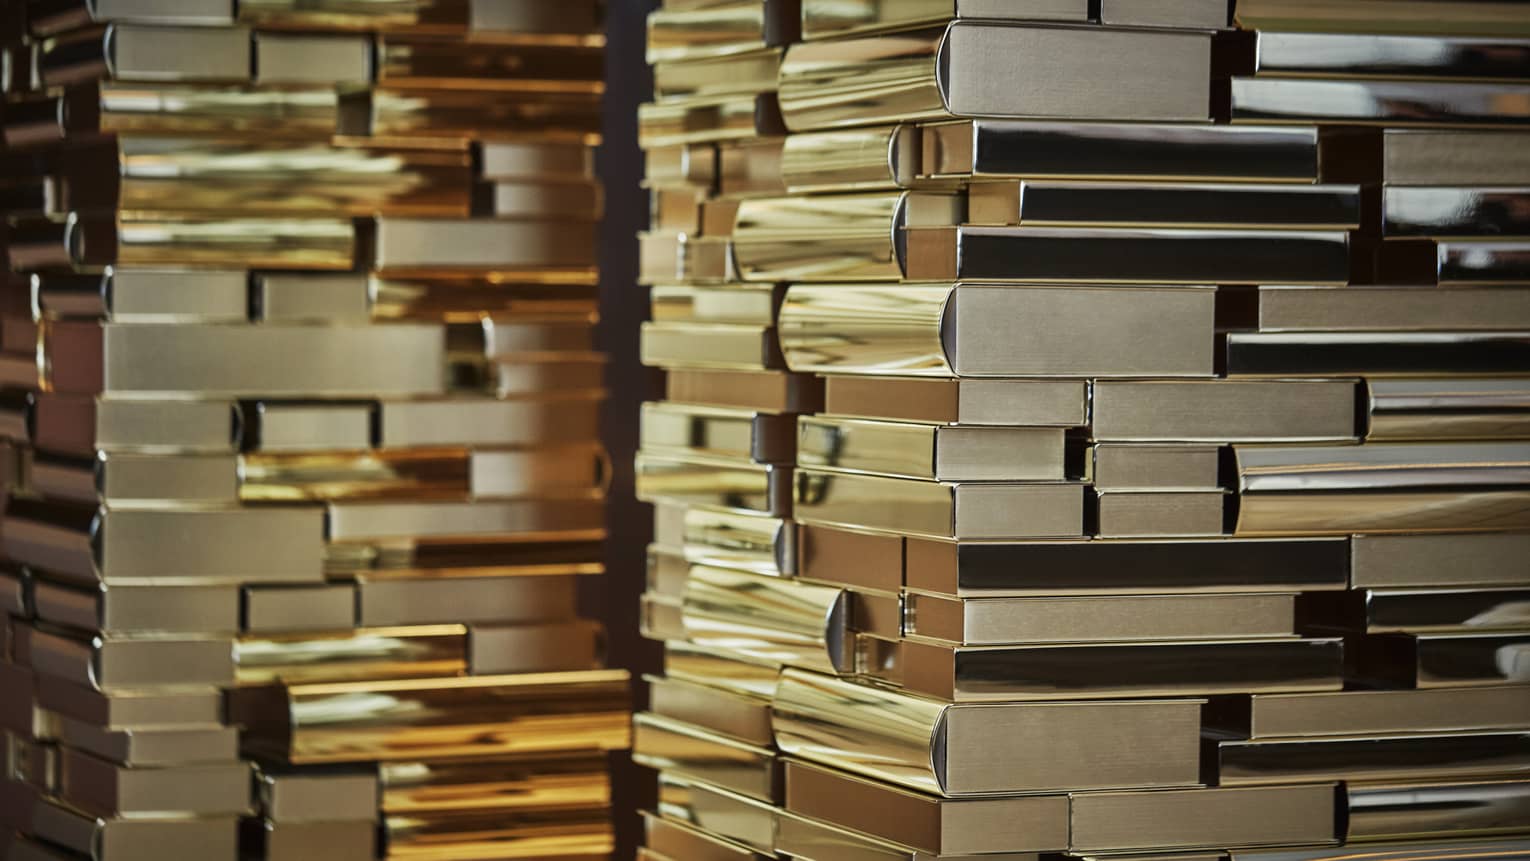 Art installation resembling many golden stacked books